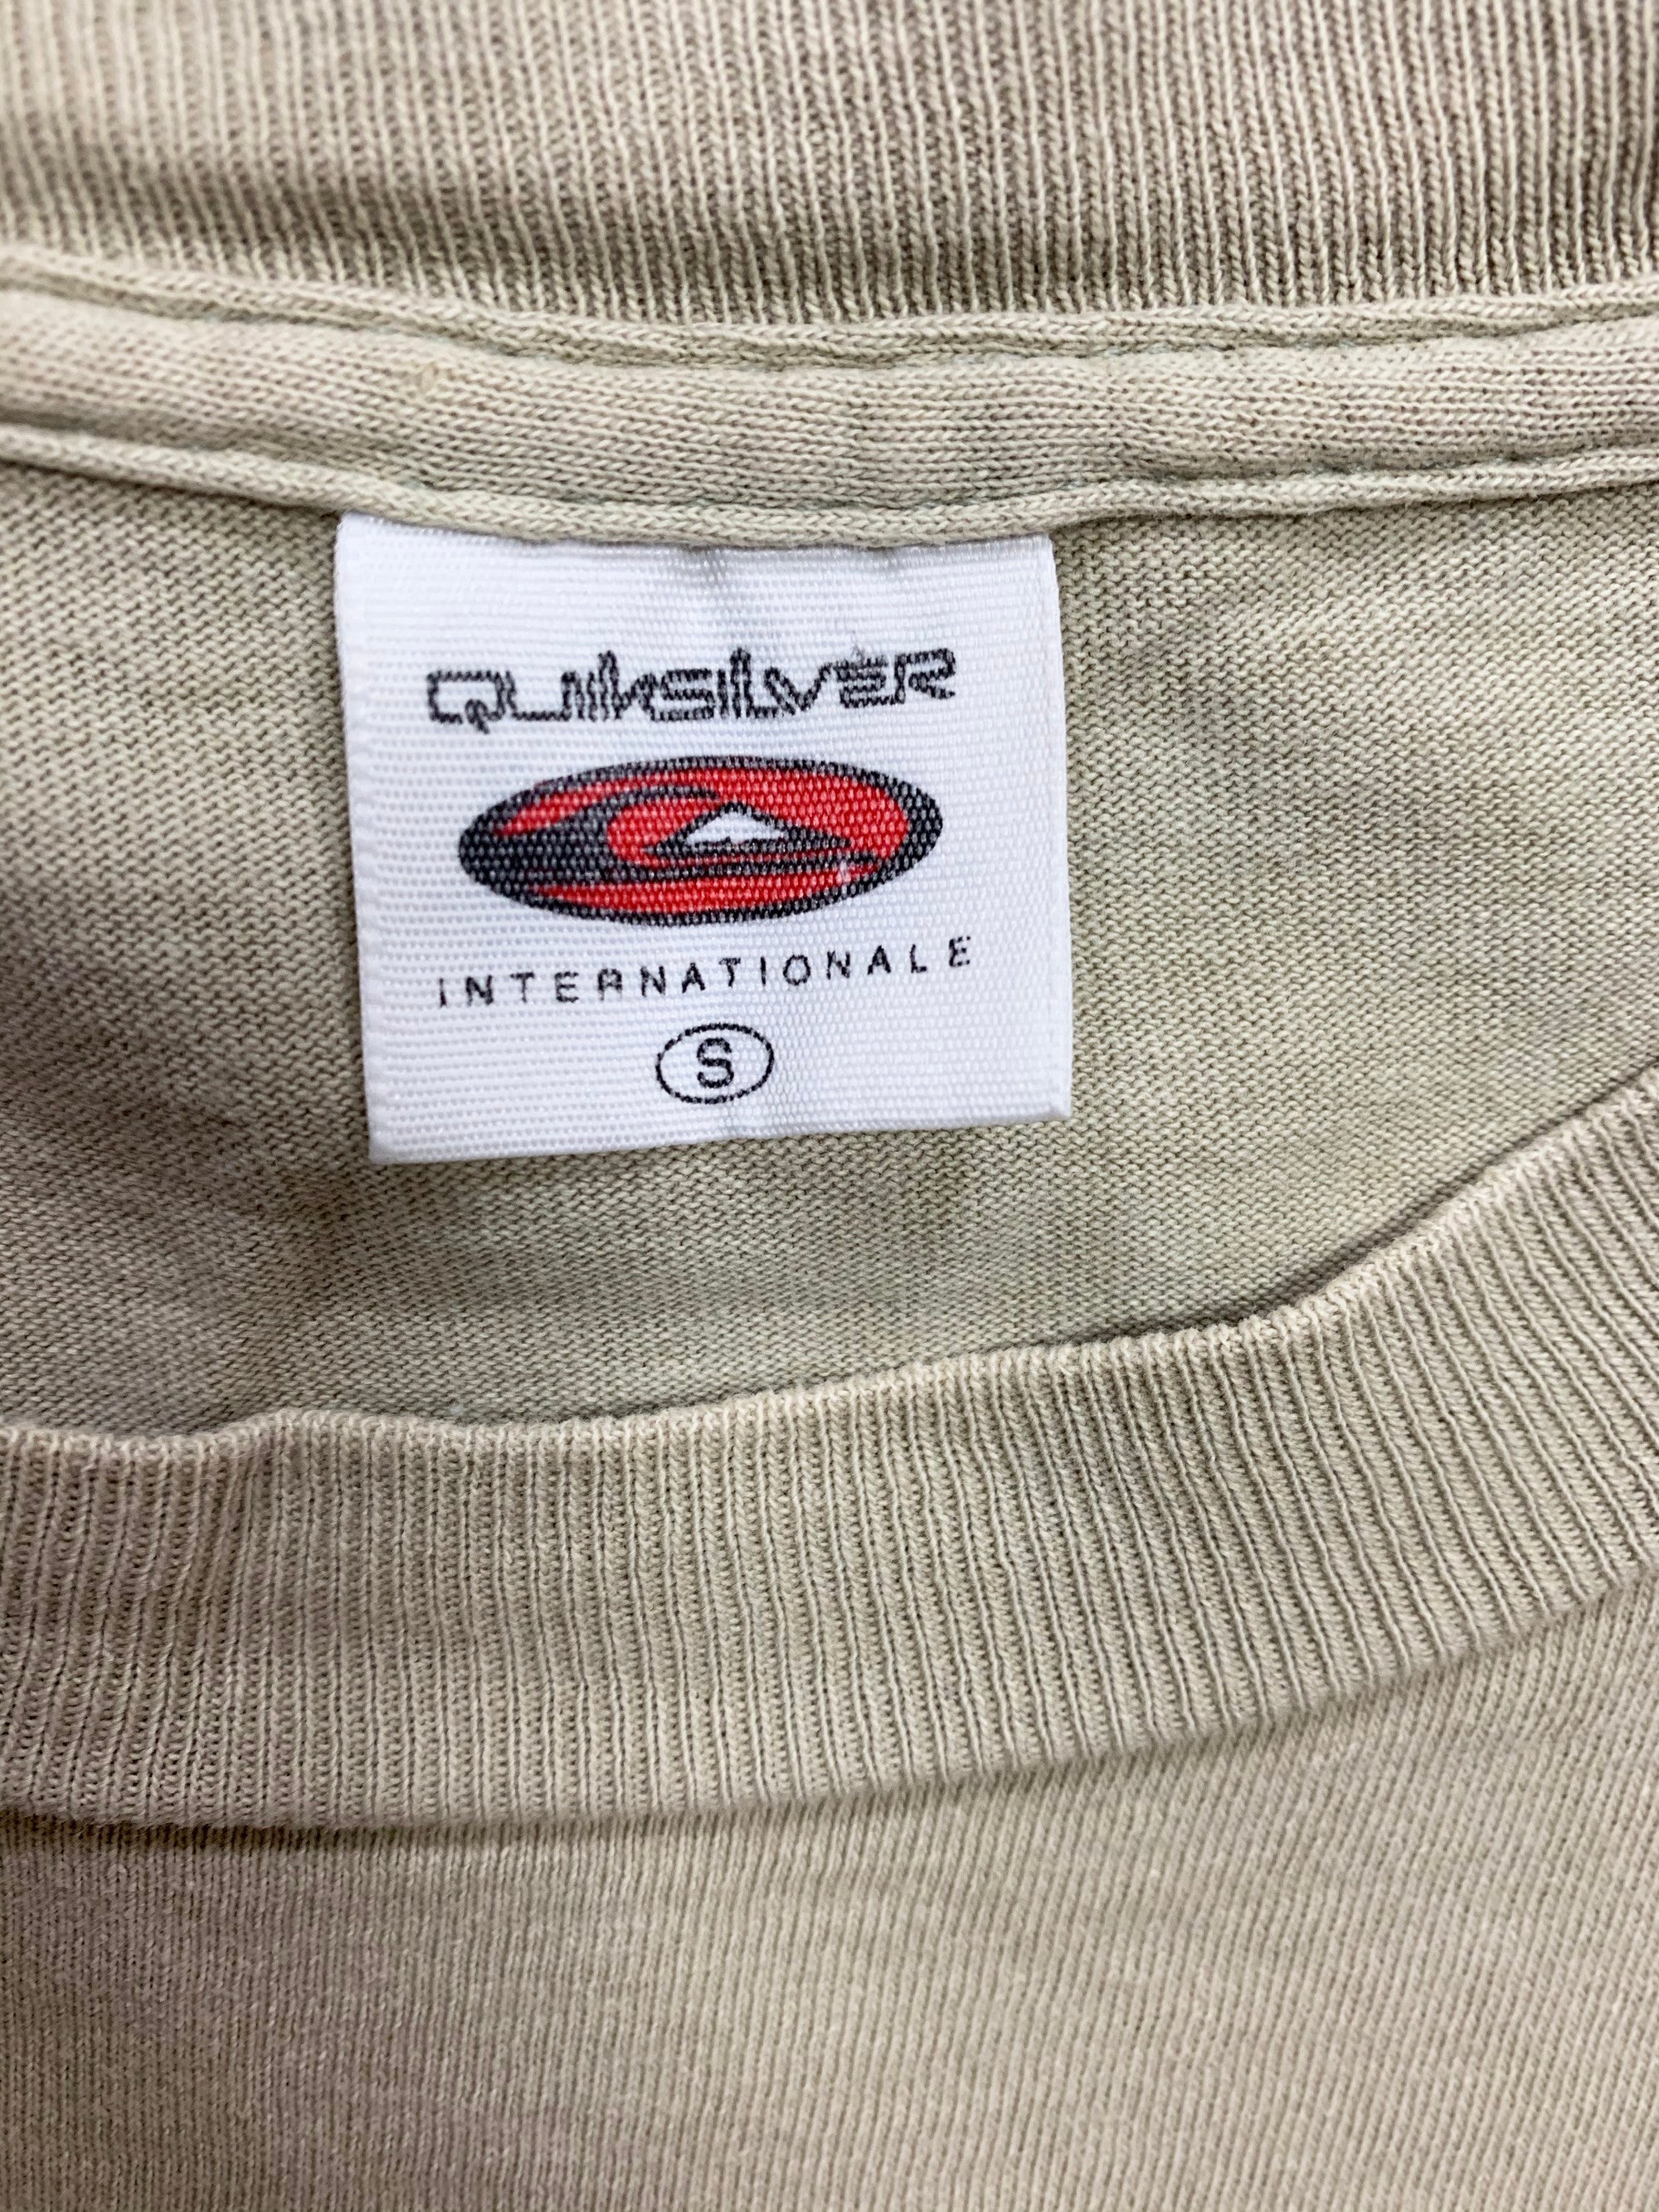 Quik silver】90s クィックシルバー オールドサーフ Tシャツ (men's S